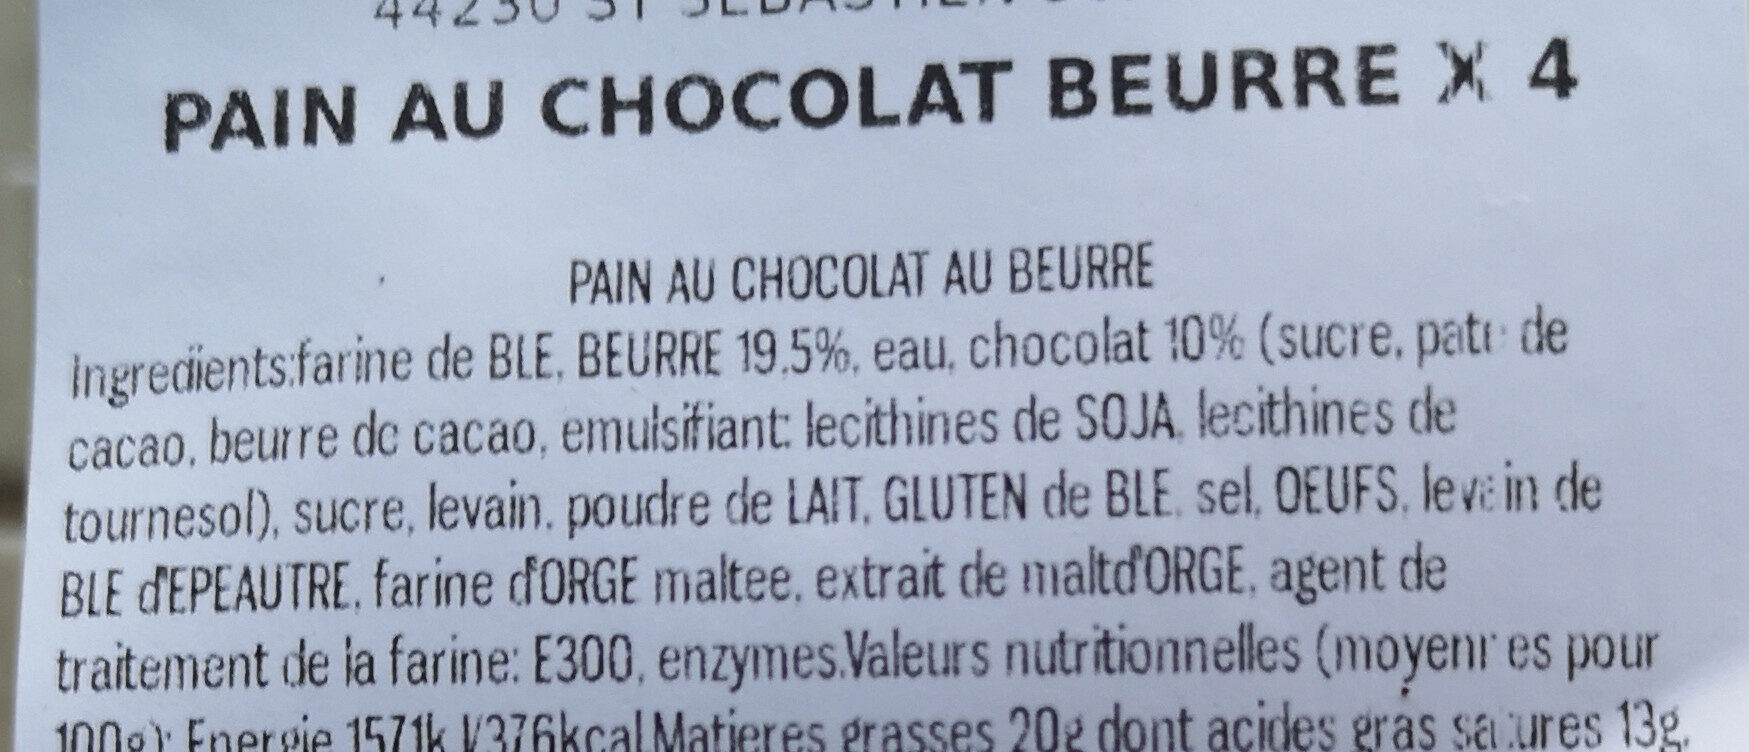 Pain au chocolat beurre - Ingredienser - fr